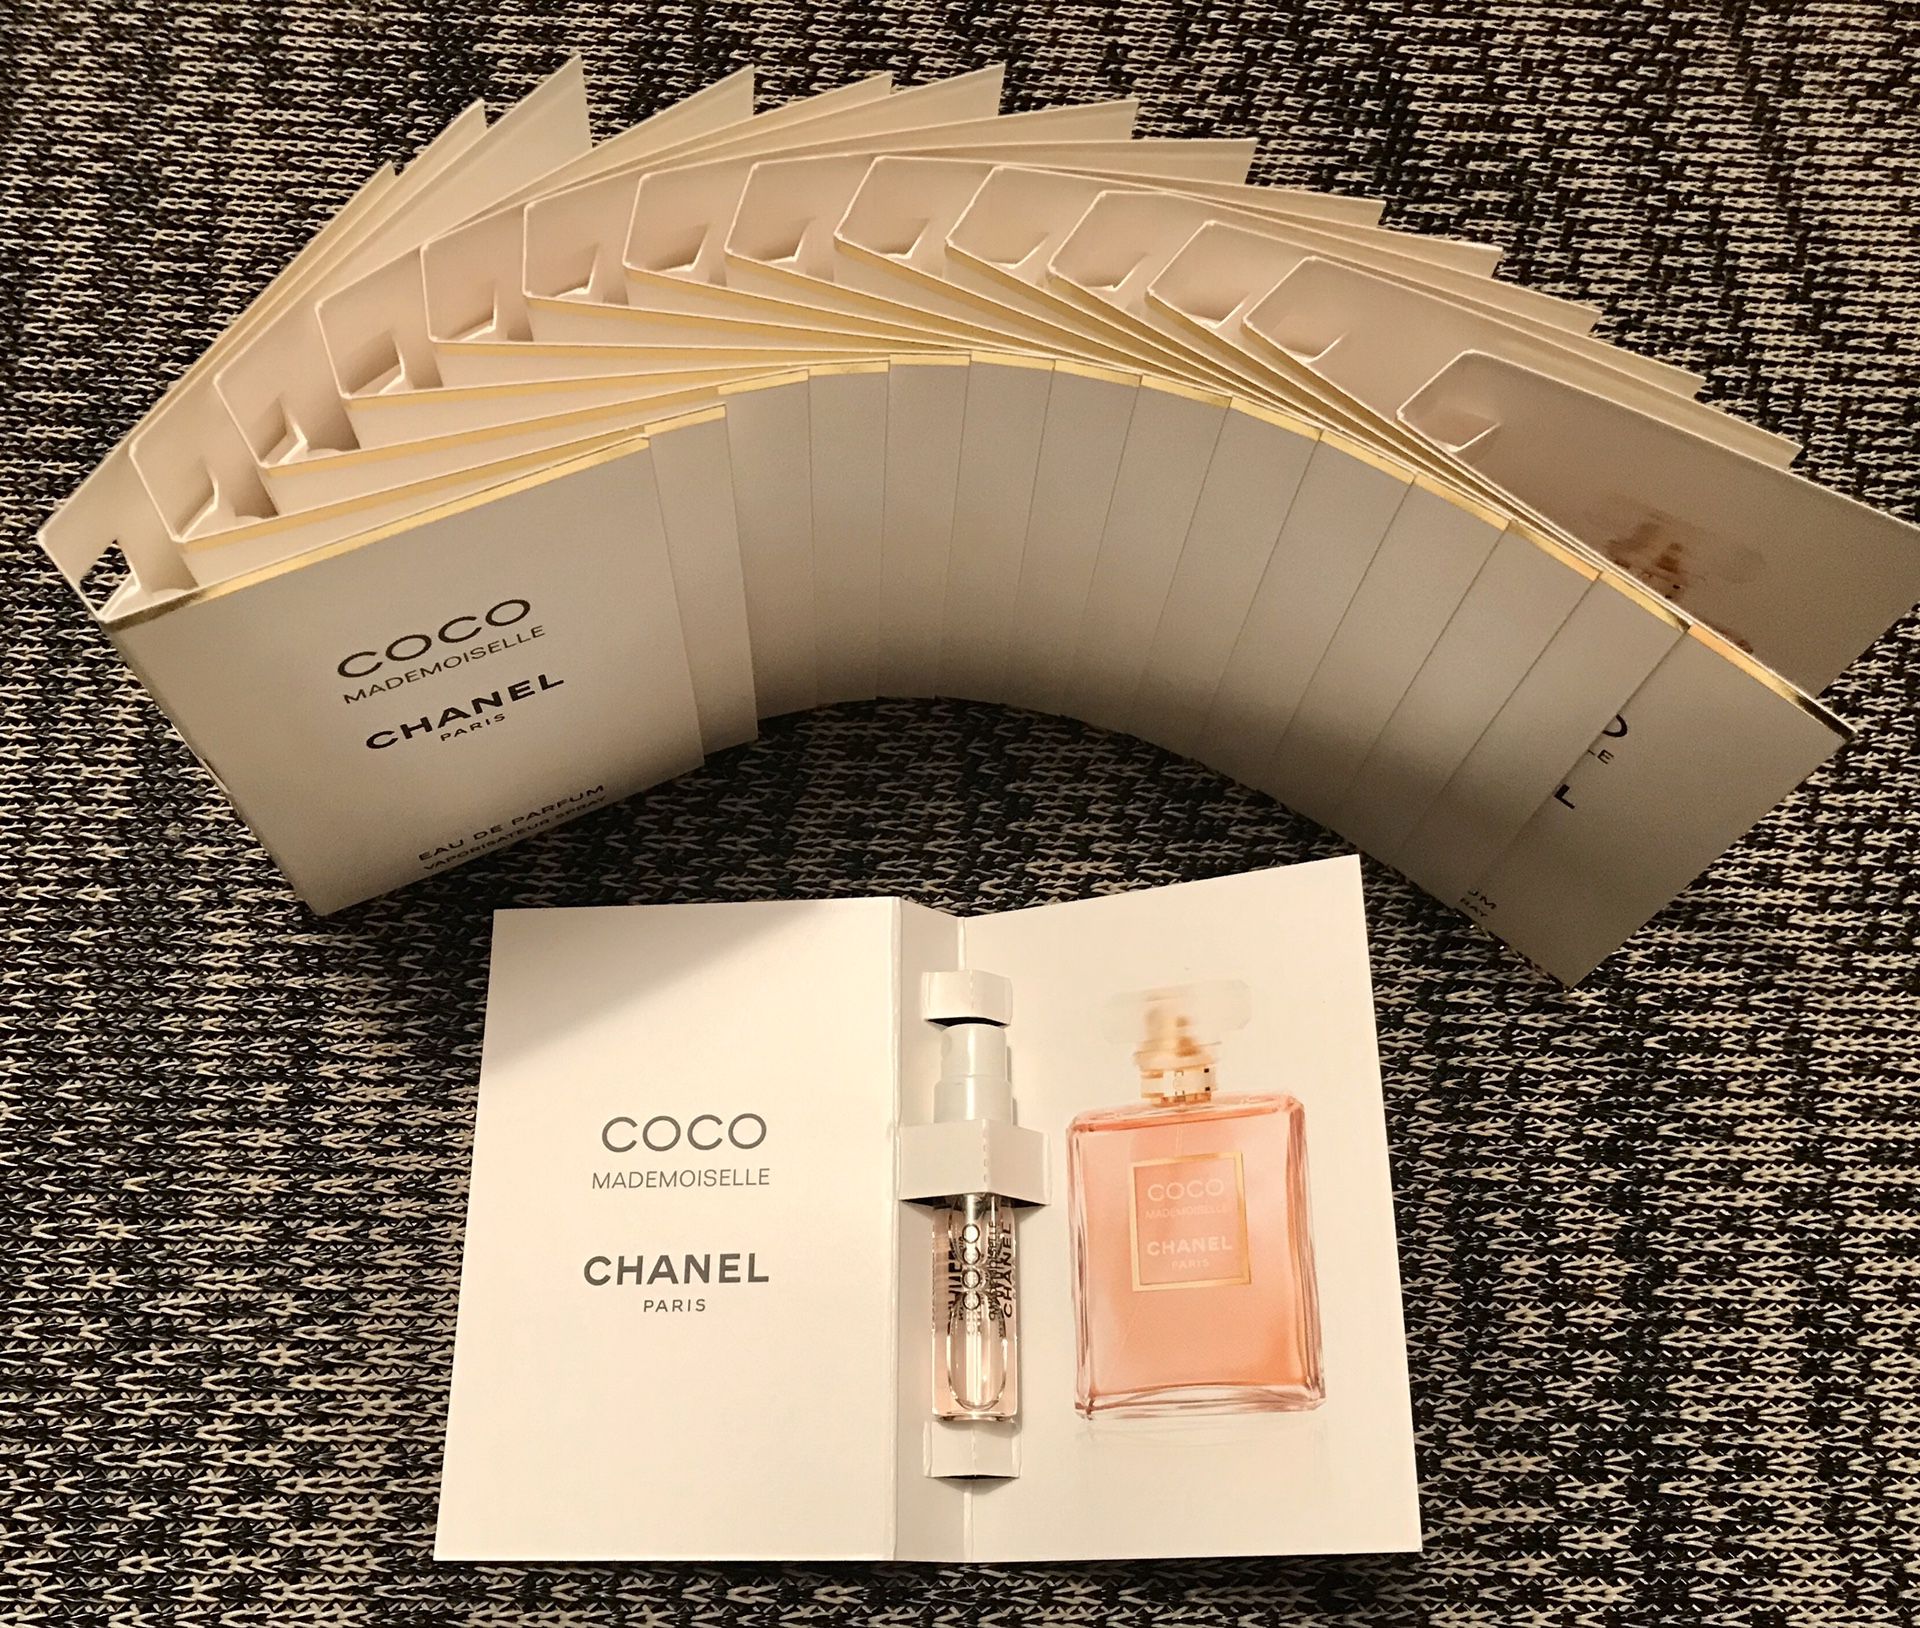 Chanel - COCO Mademoiselle sample set